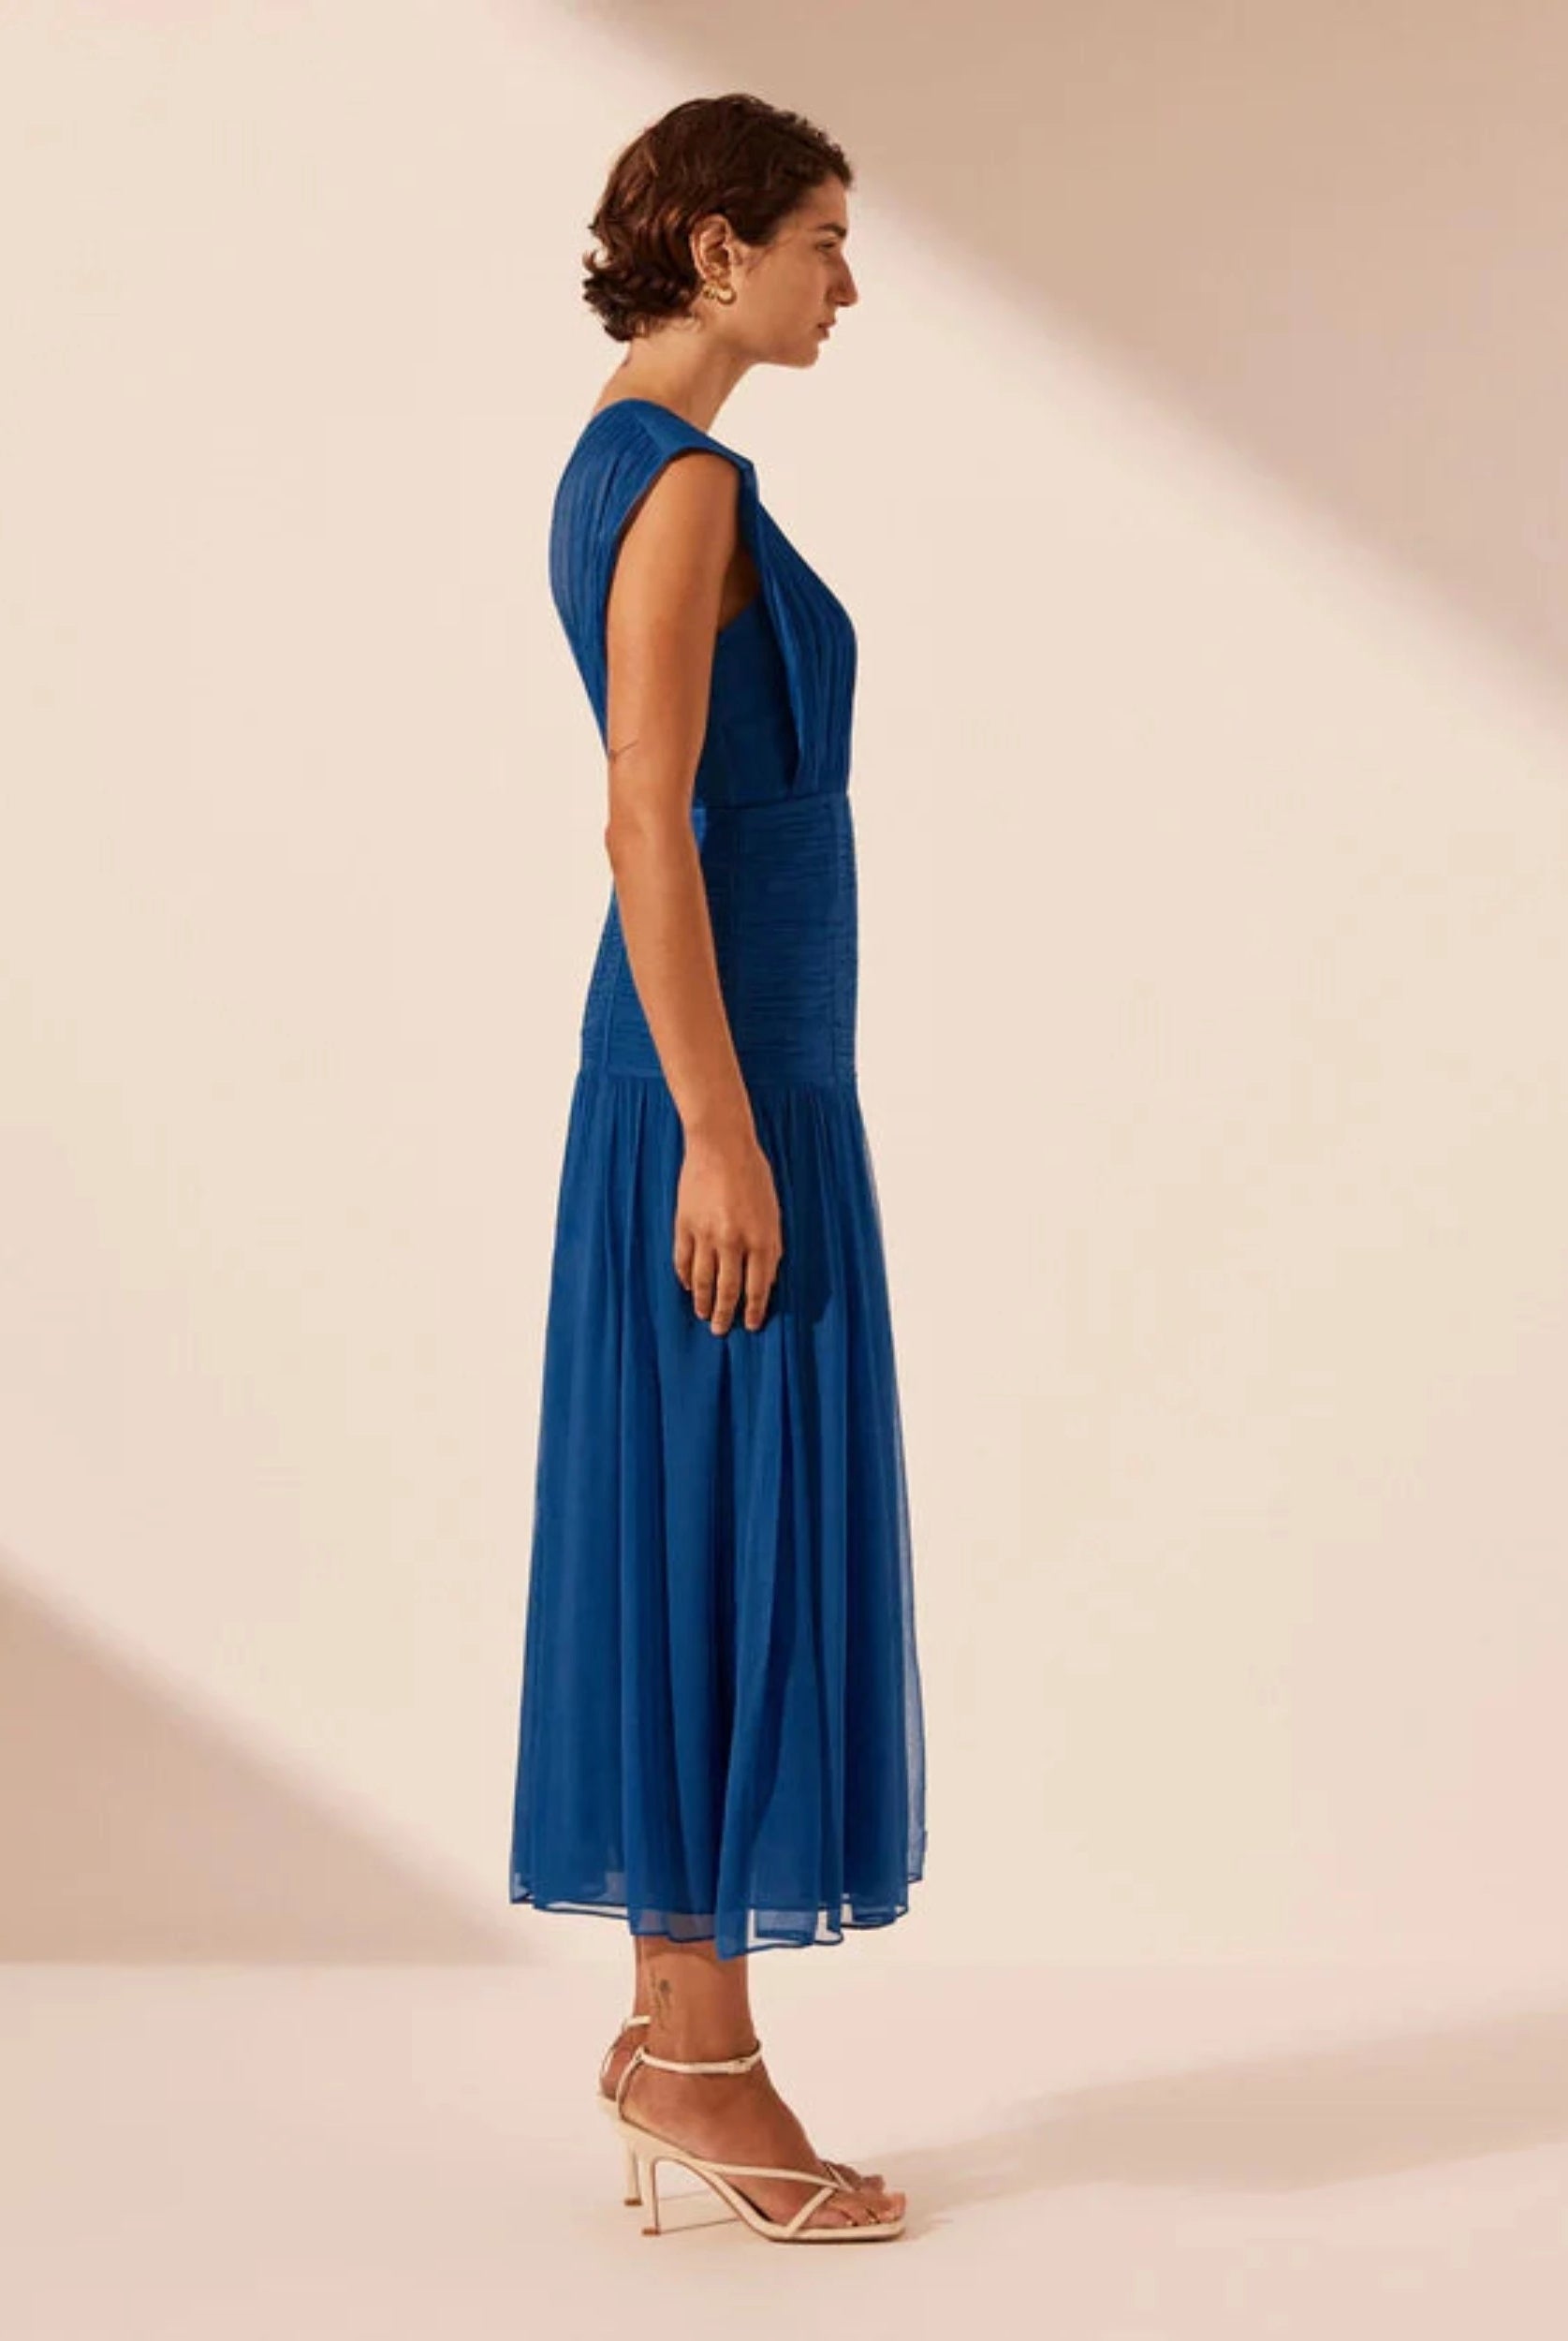 Shona Joy Maya Ruched Dress in Strong Blue